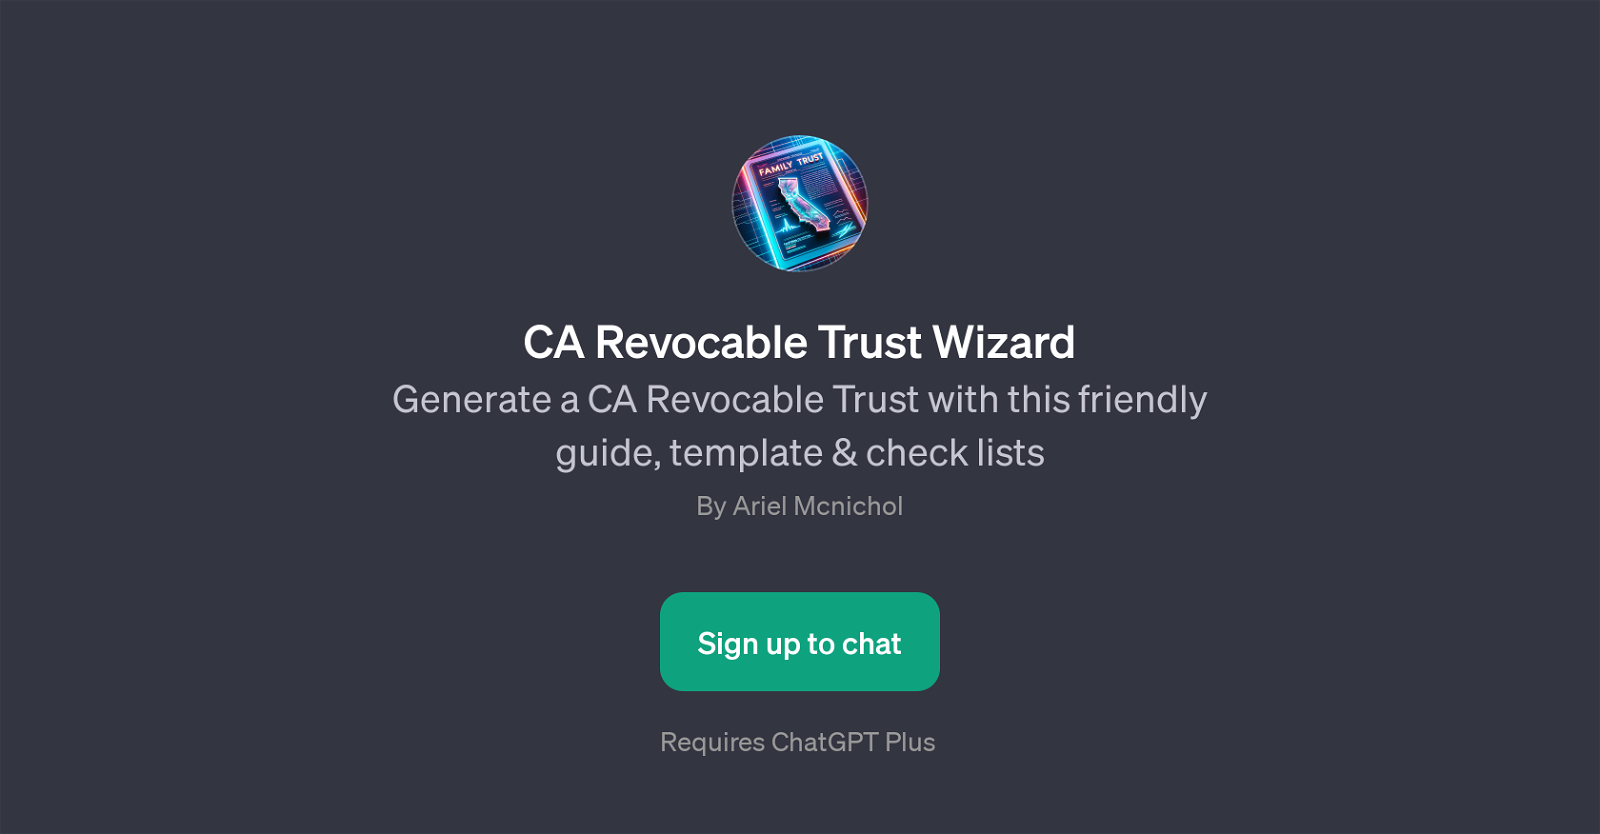 CA Revocable Trust Wizard website